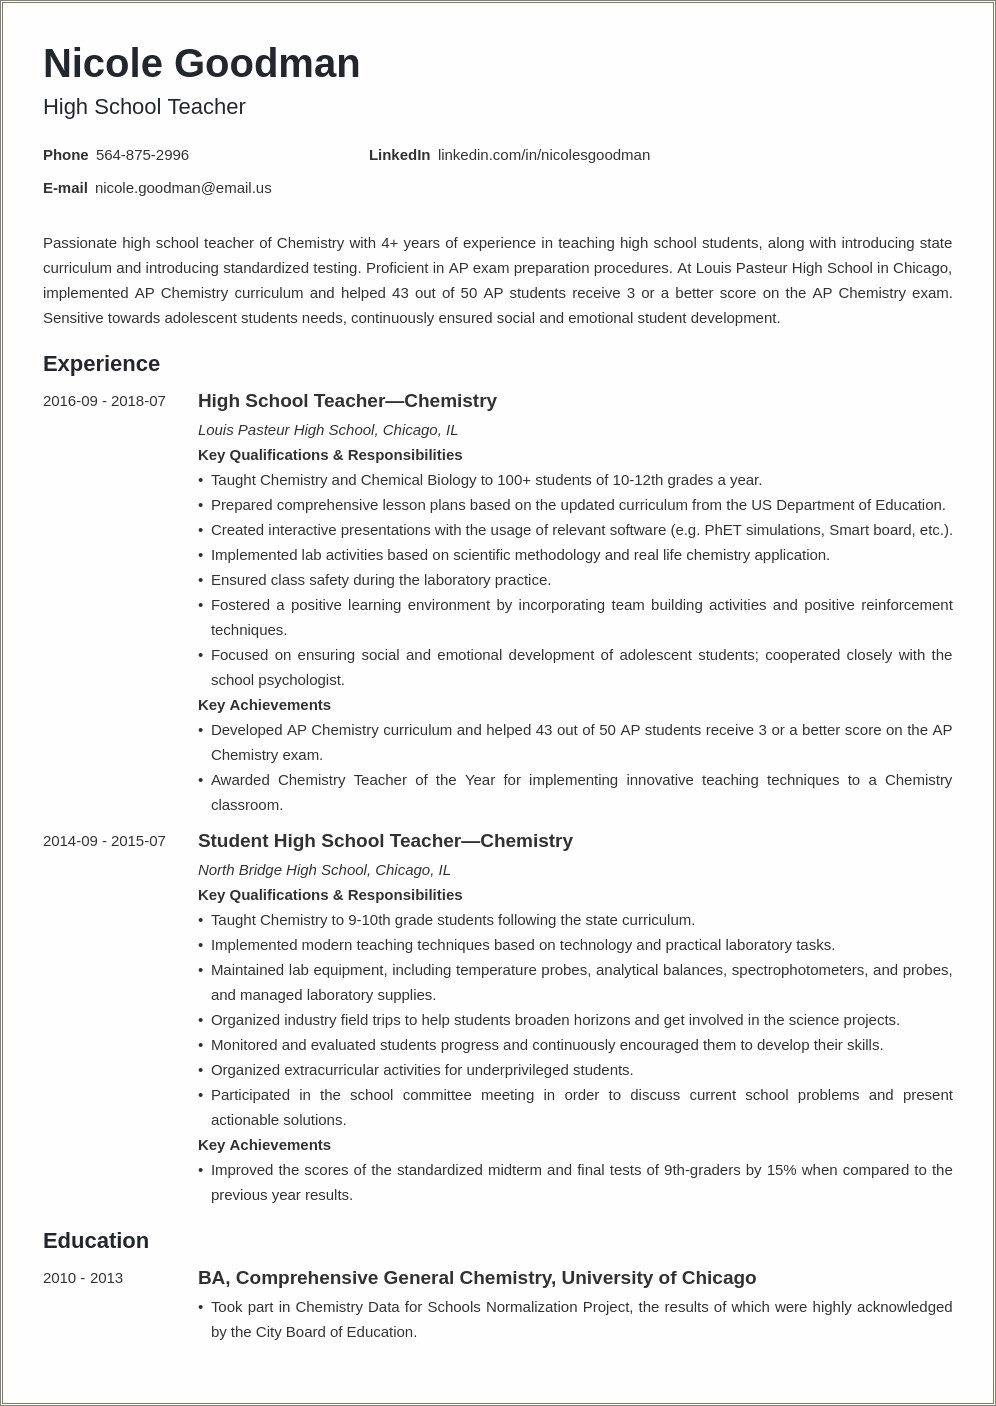 Resume Description For Middle School Teacher